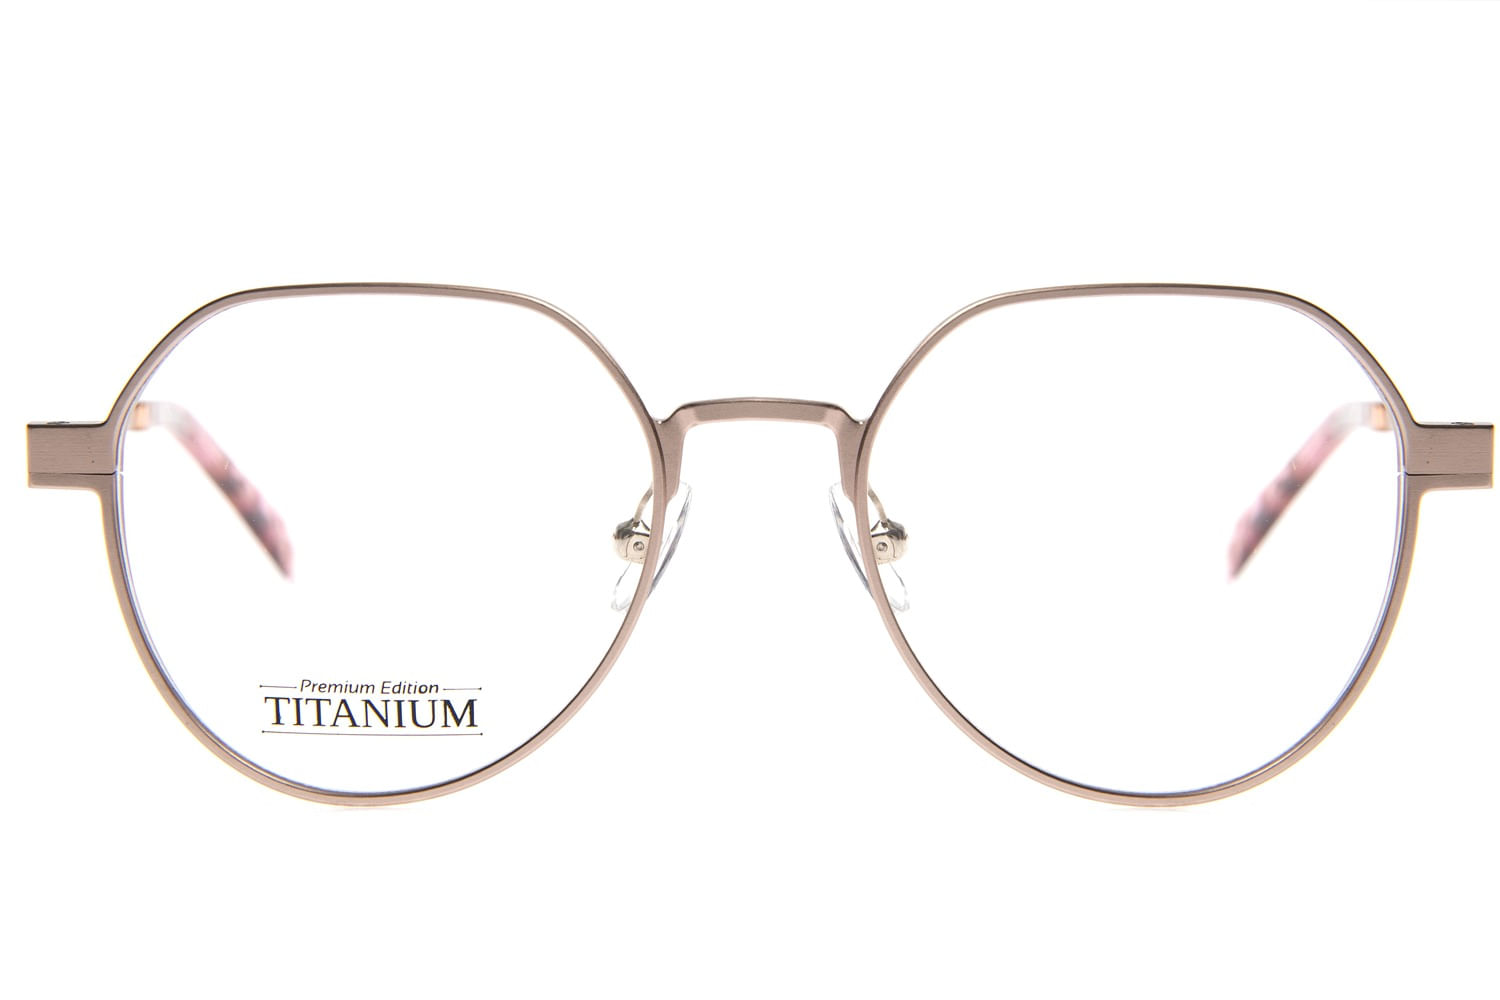 Chashma de titânio moda feminina óculos cinza lente vermelha